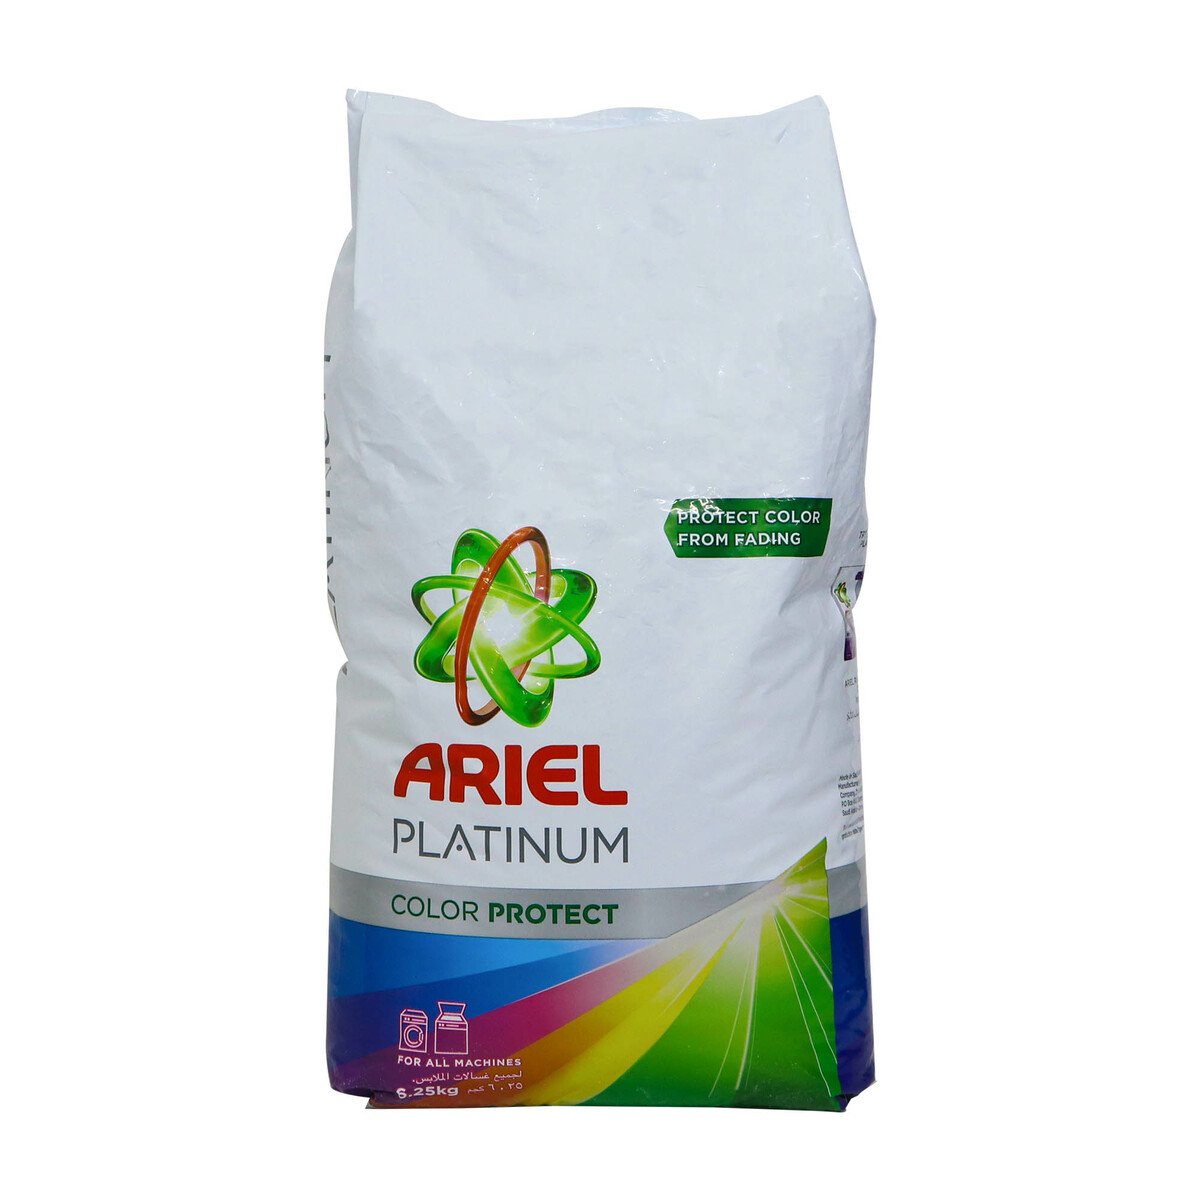 Ariel Platinum Washing Powder Color Protect 6.25kg